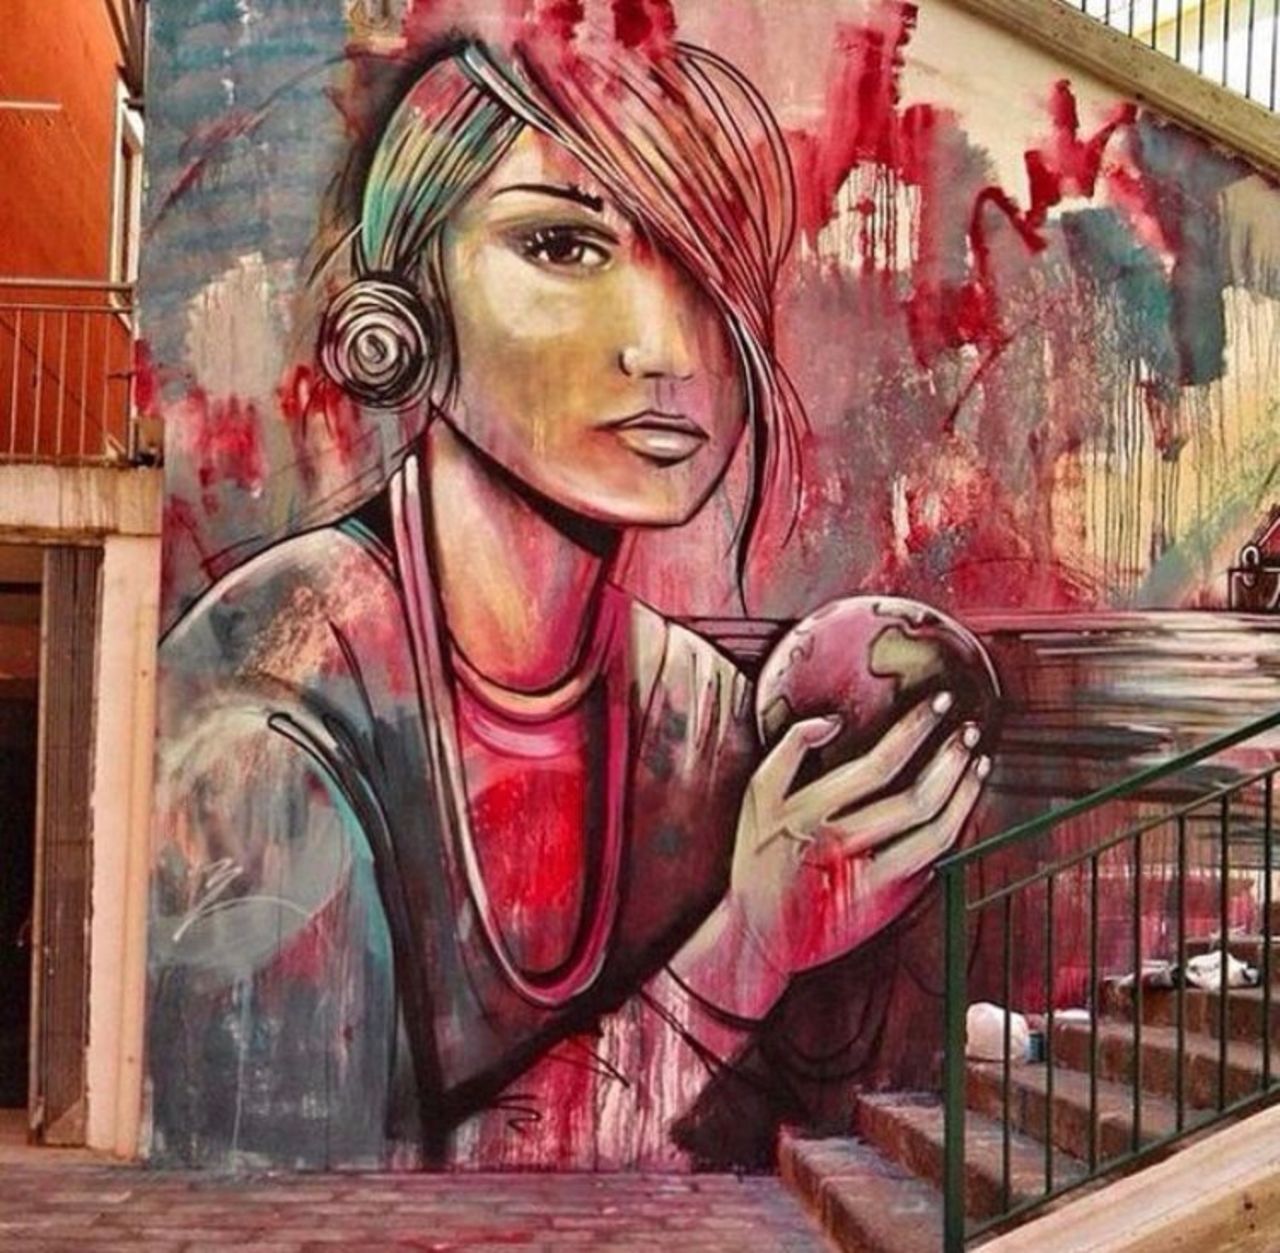 New work by Alice Pasquini #streetart #mural #graffiti #art https://t.co/ucXk08Ux2H